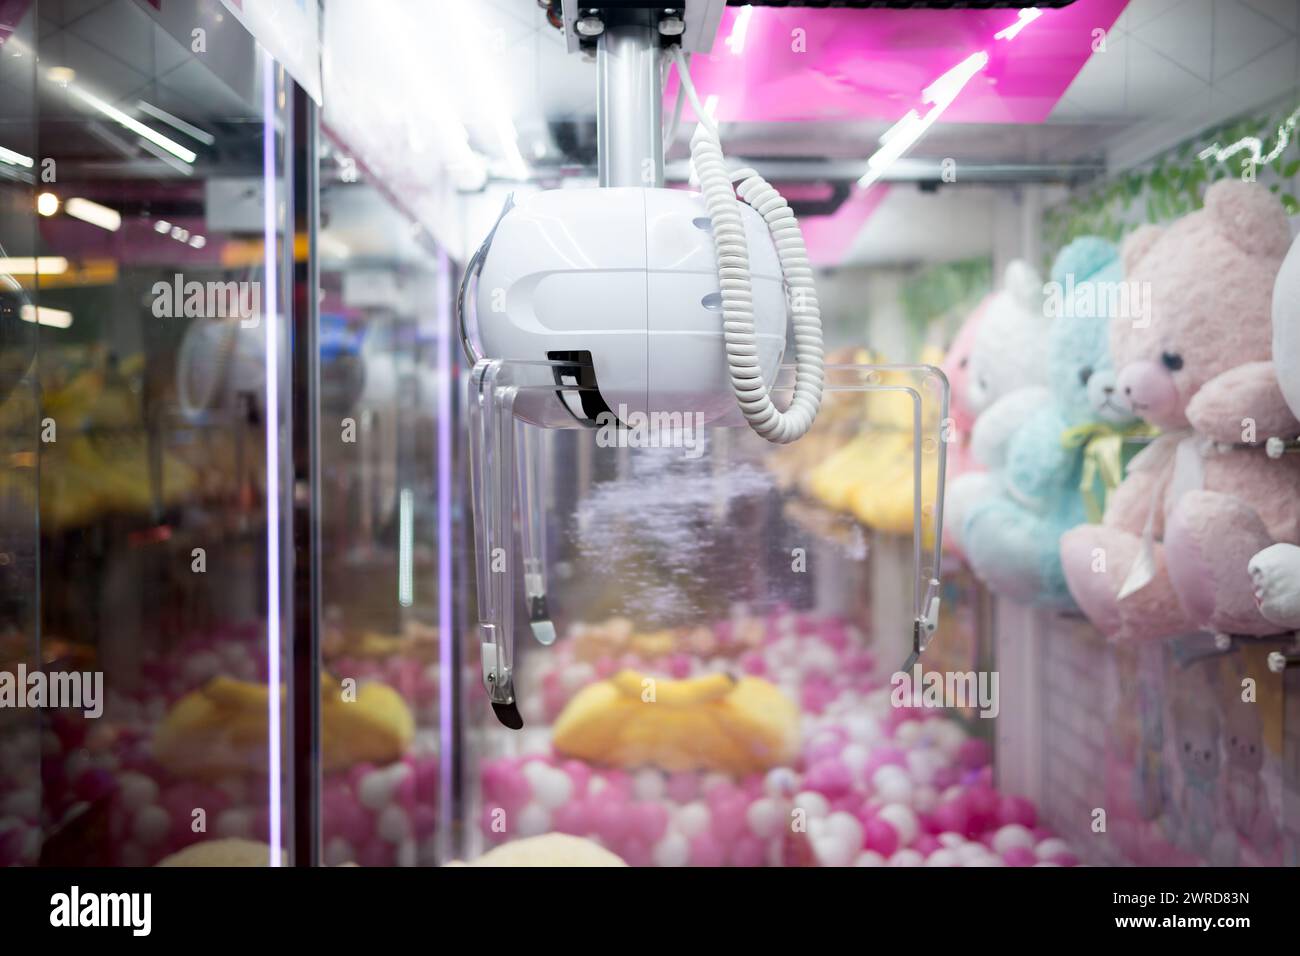 Claw machine crane game catcher at an arcade amusement game center. Stock Photo